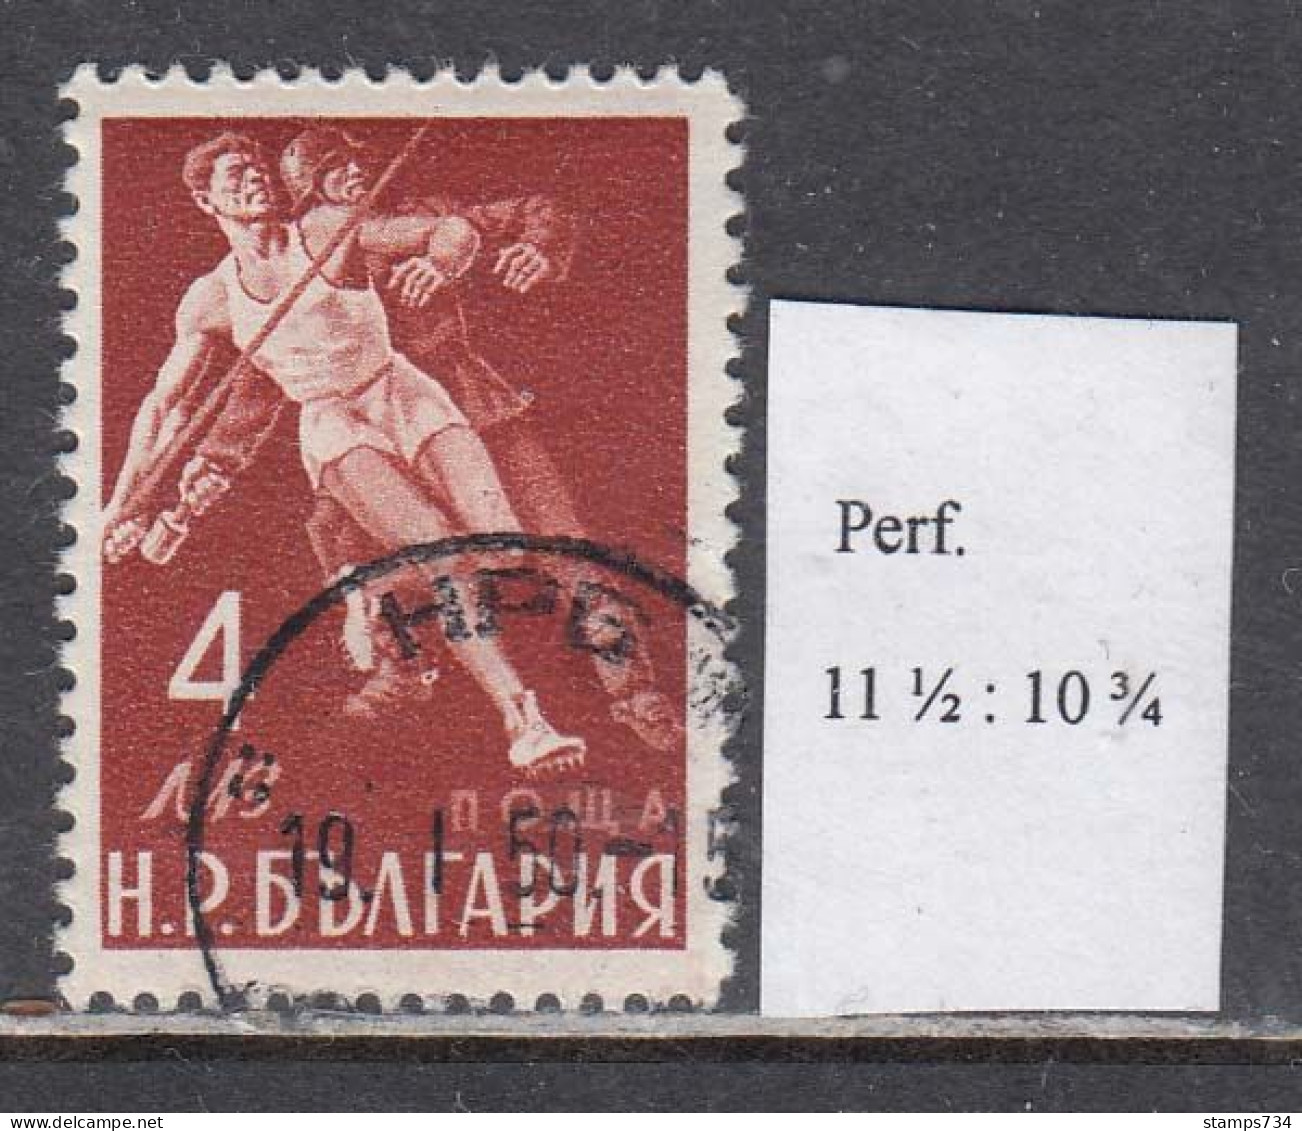 Bulgaria 1949 - Sport 4 Lev, Mi-Nr. 704, Rare Preforation 11 1/2: 10 3/4, Used - Used Stamps